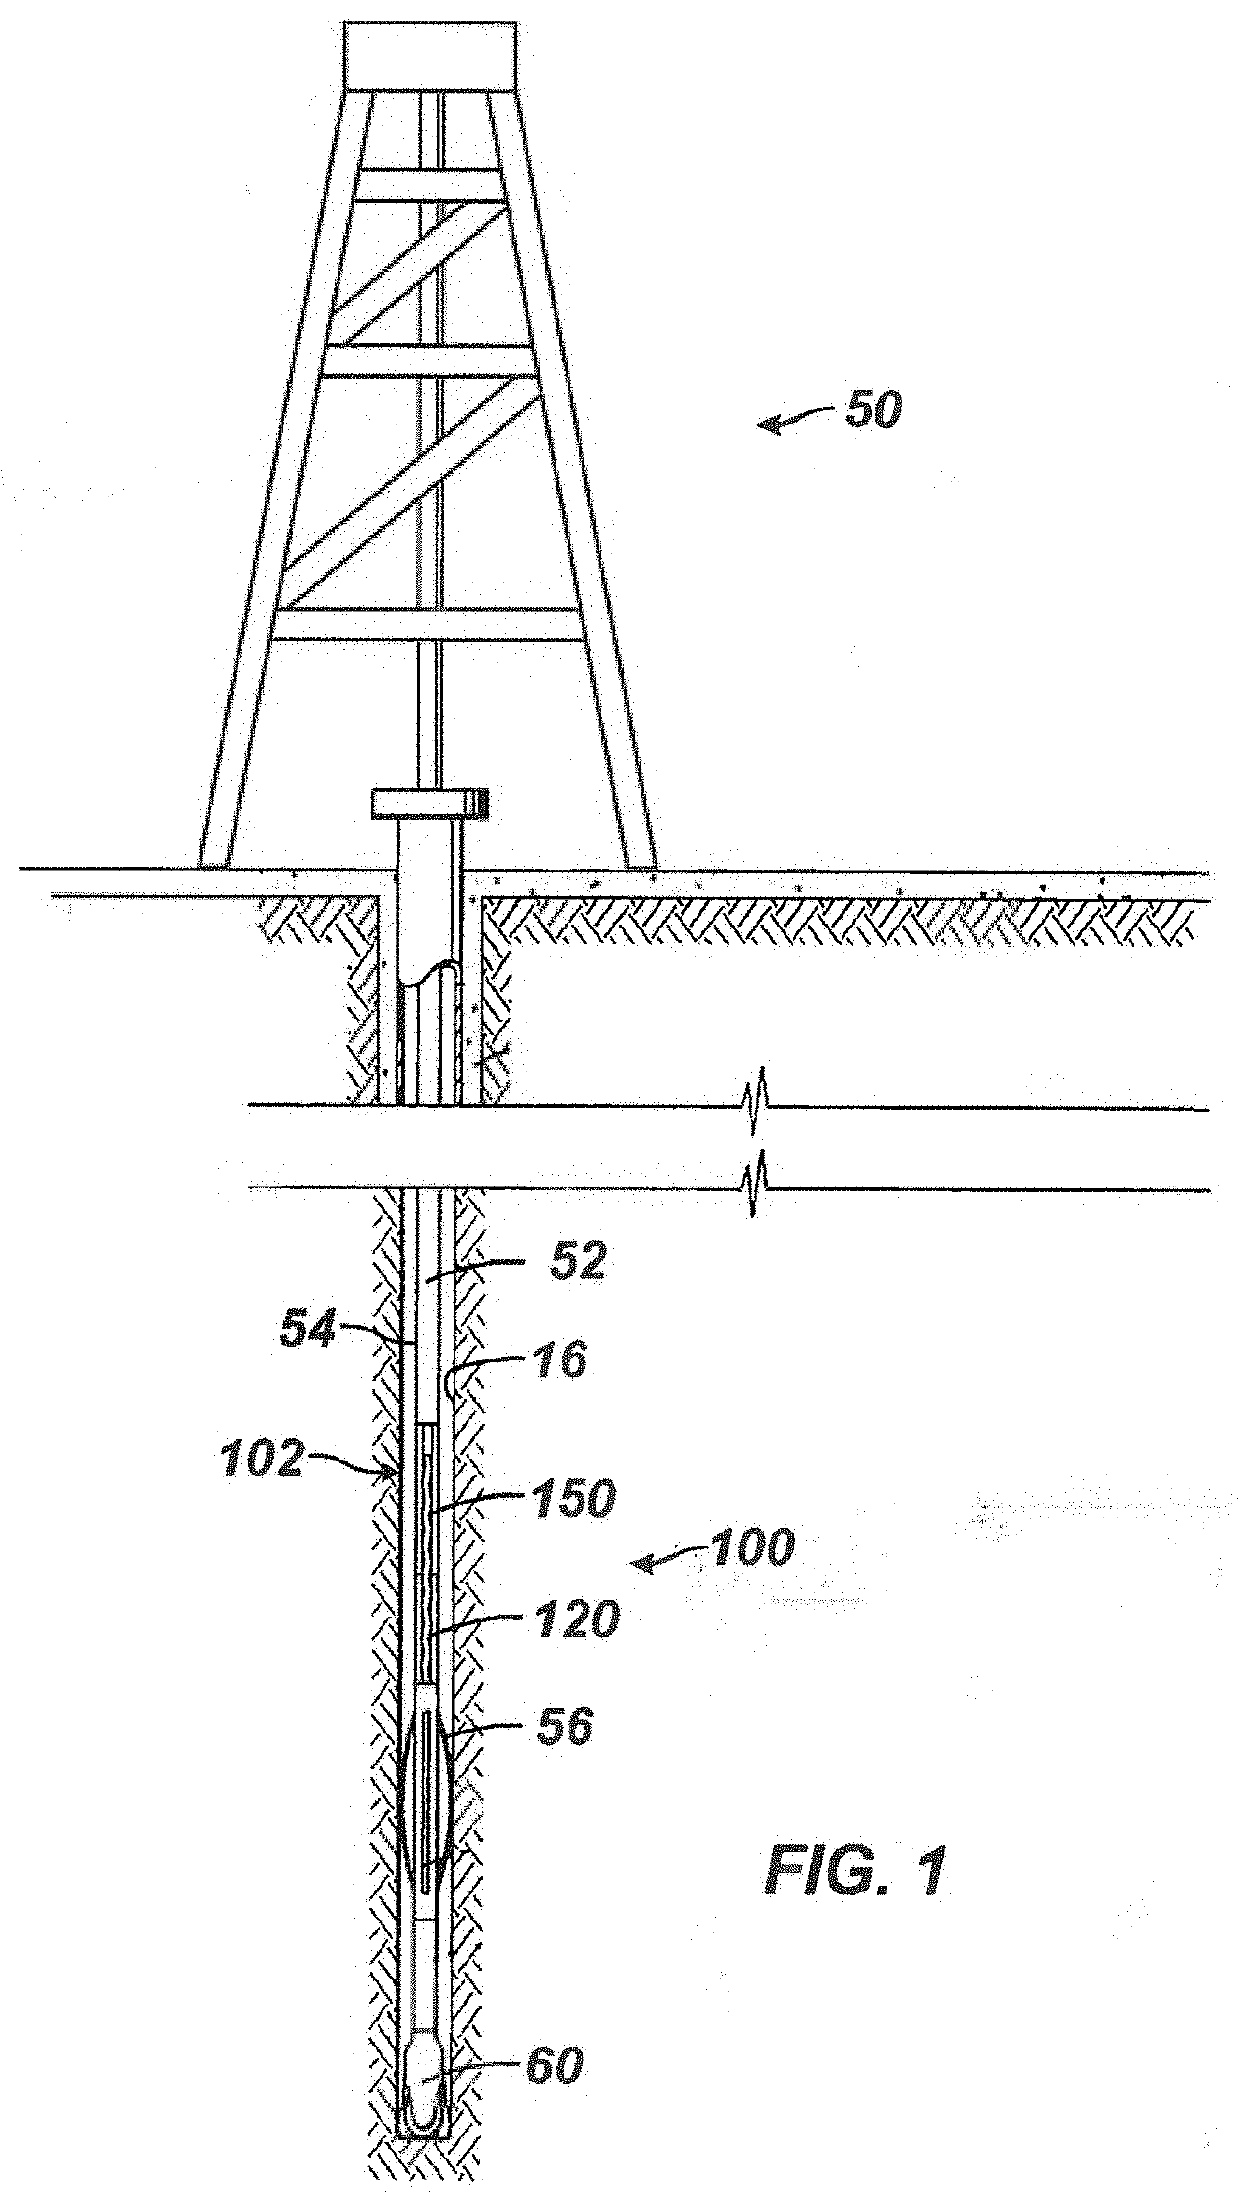 Load Balanced Power Section of Progressing Cavity Device